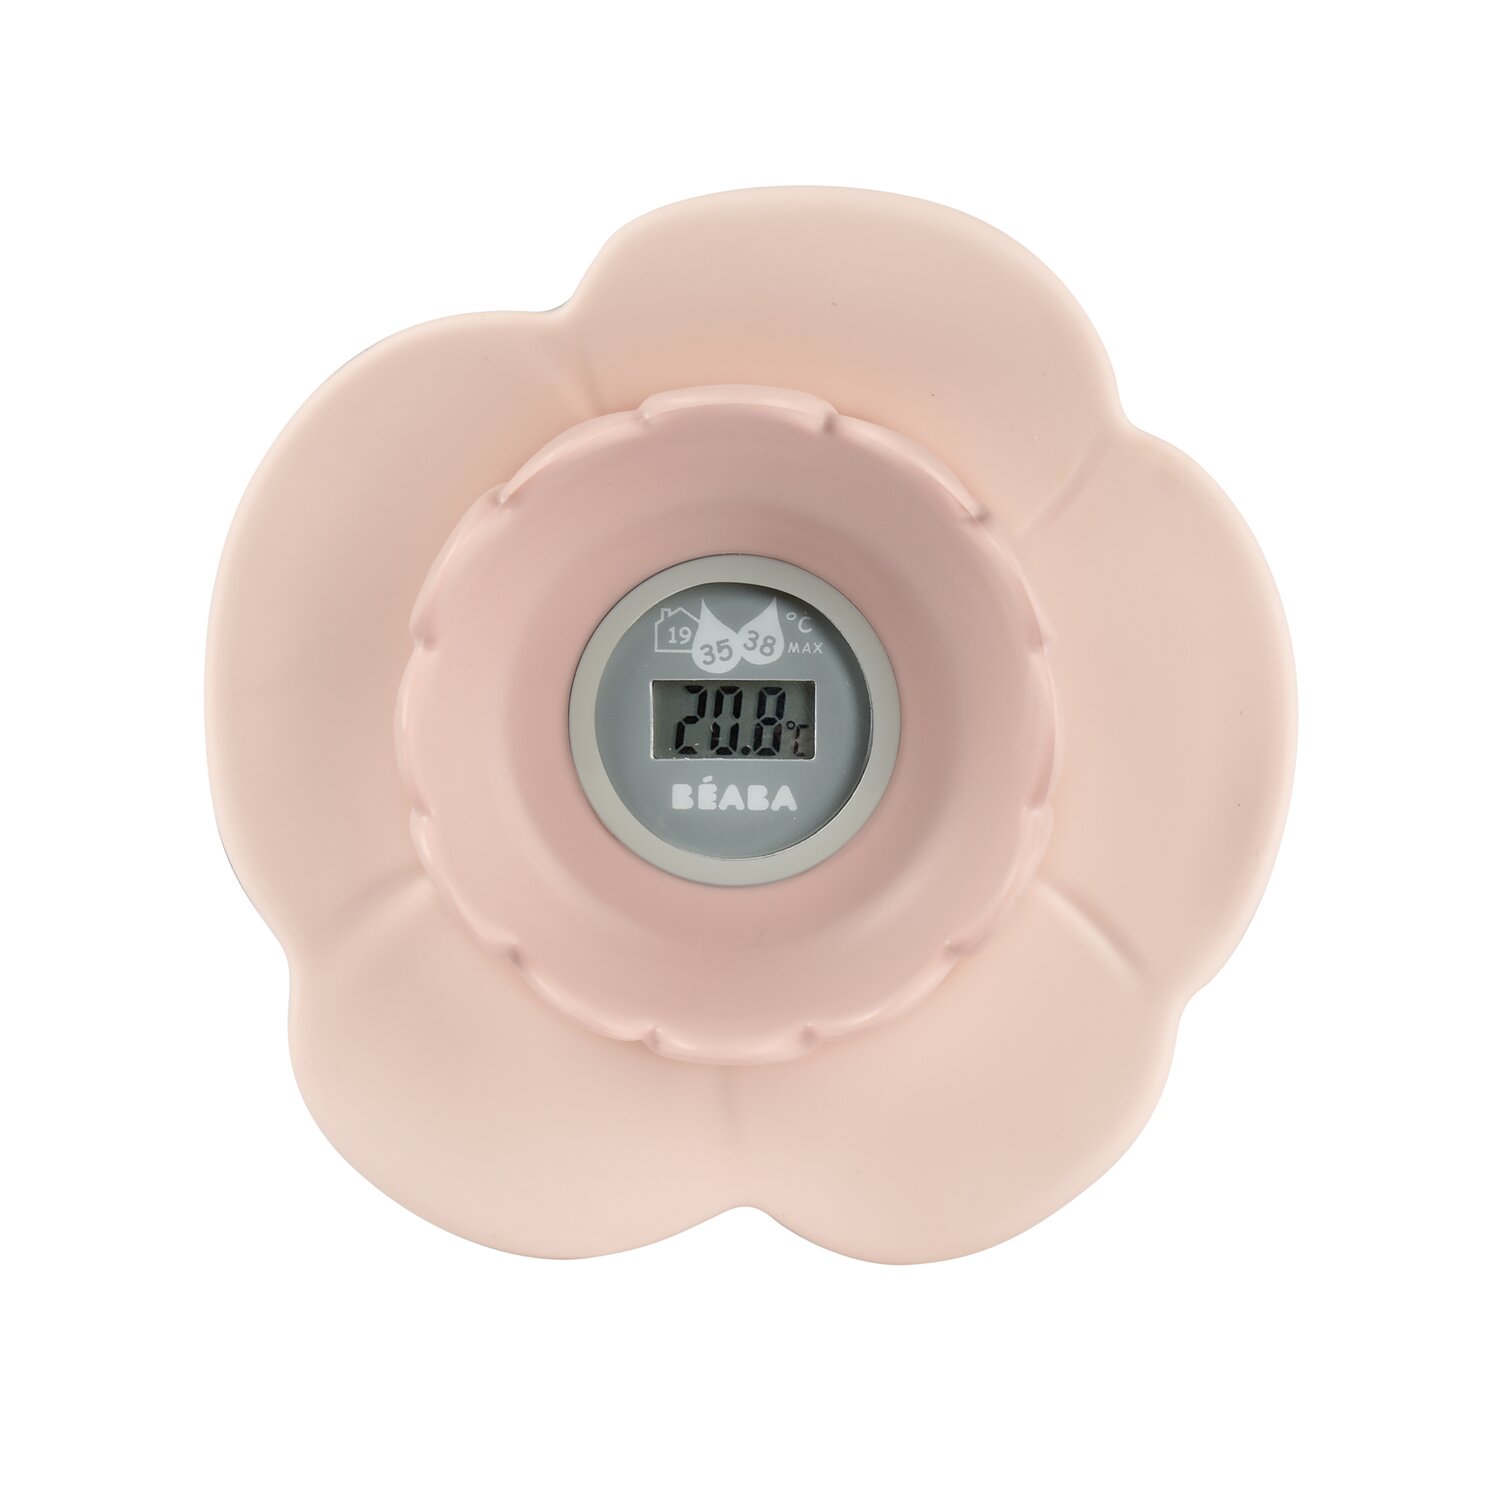  - Thermomètre de bain Lotus old pink